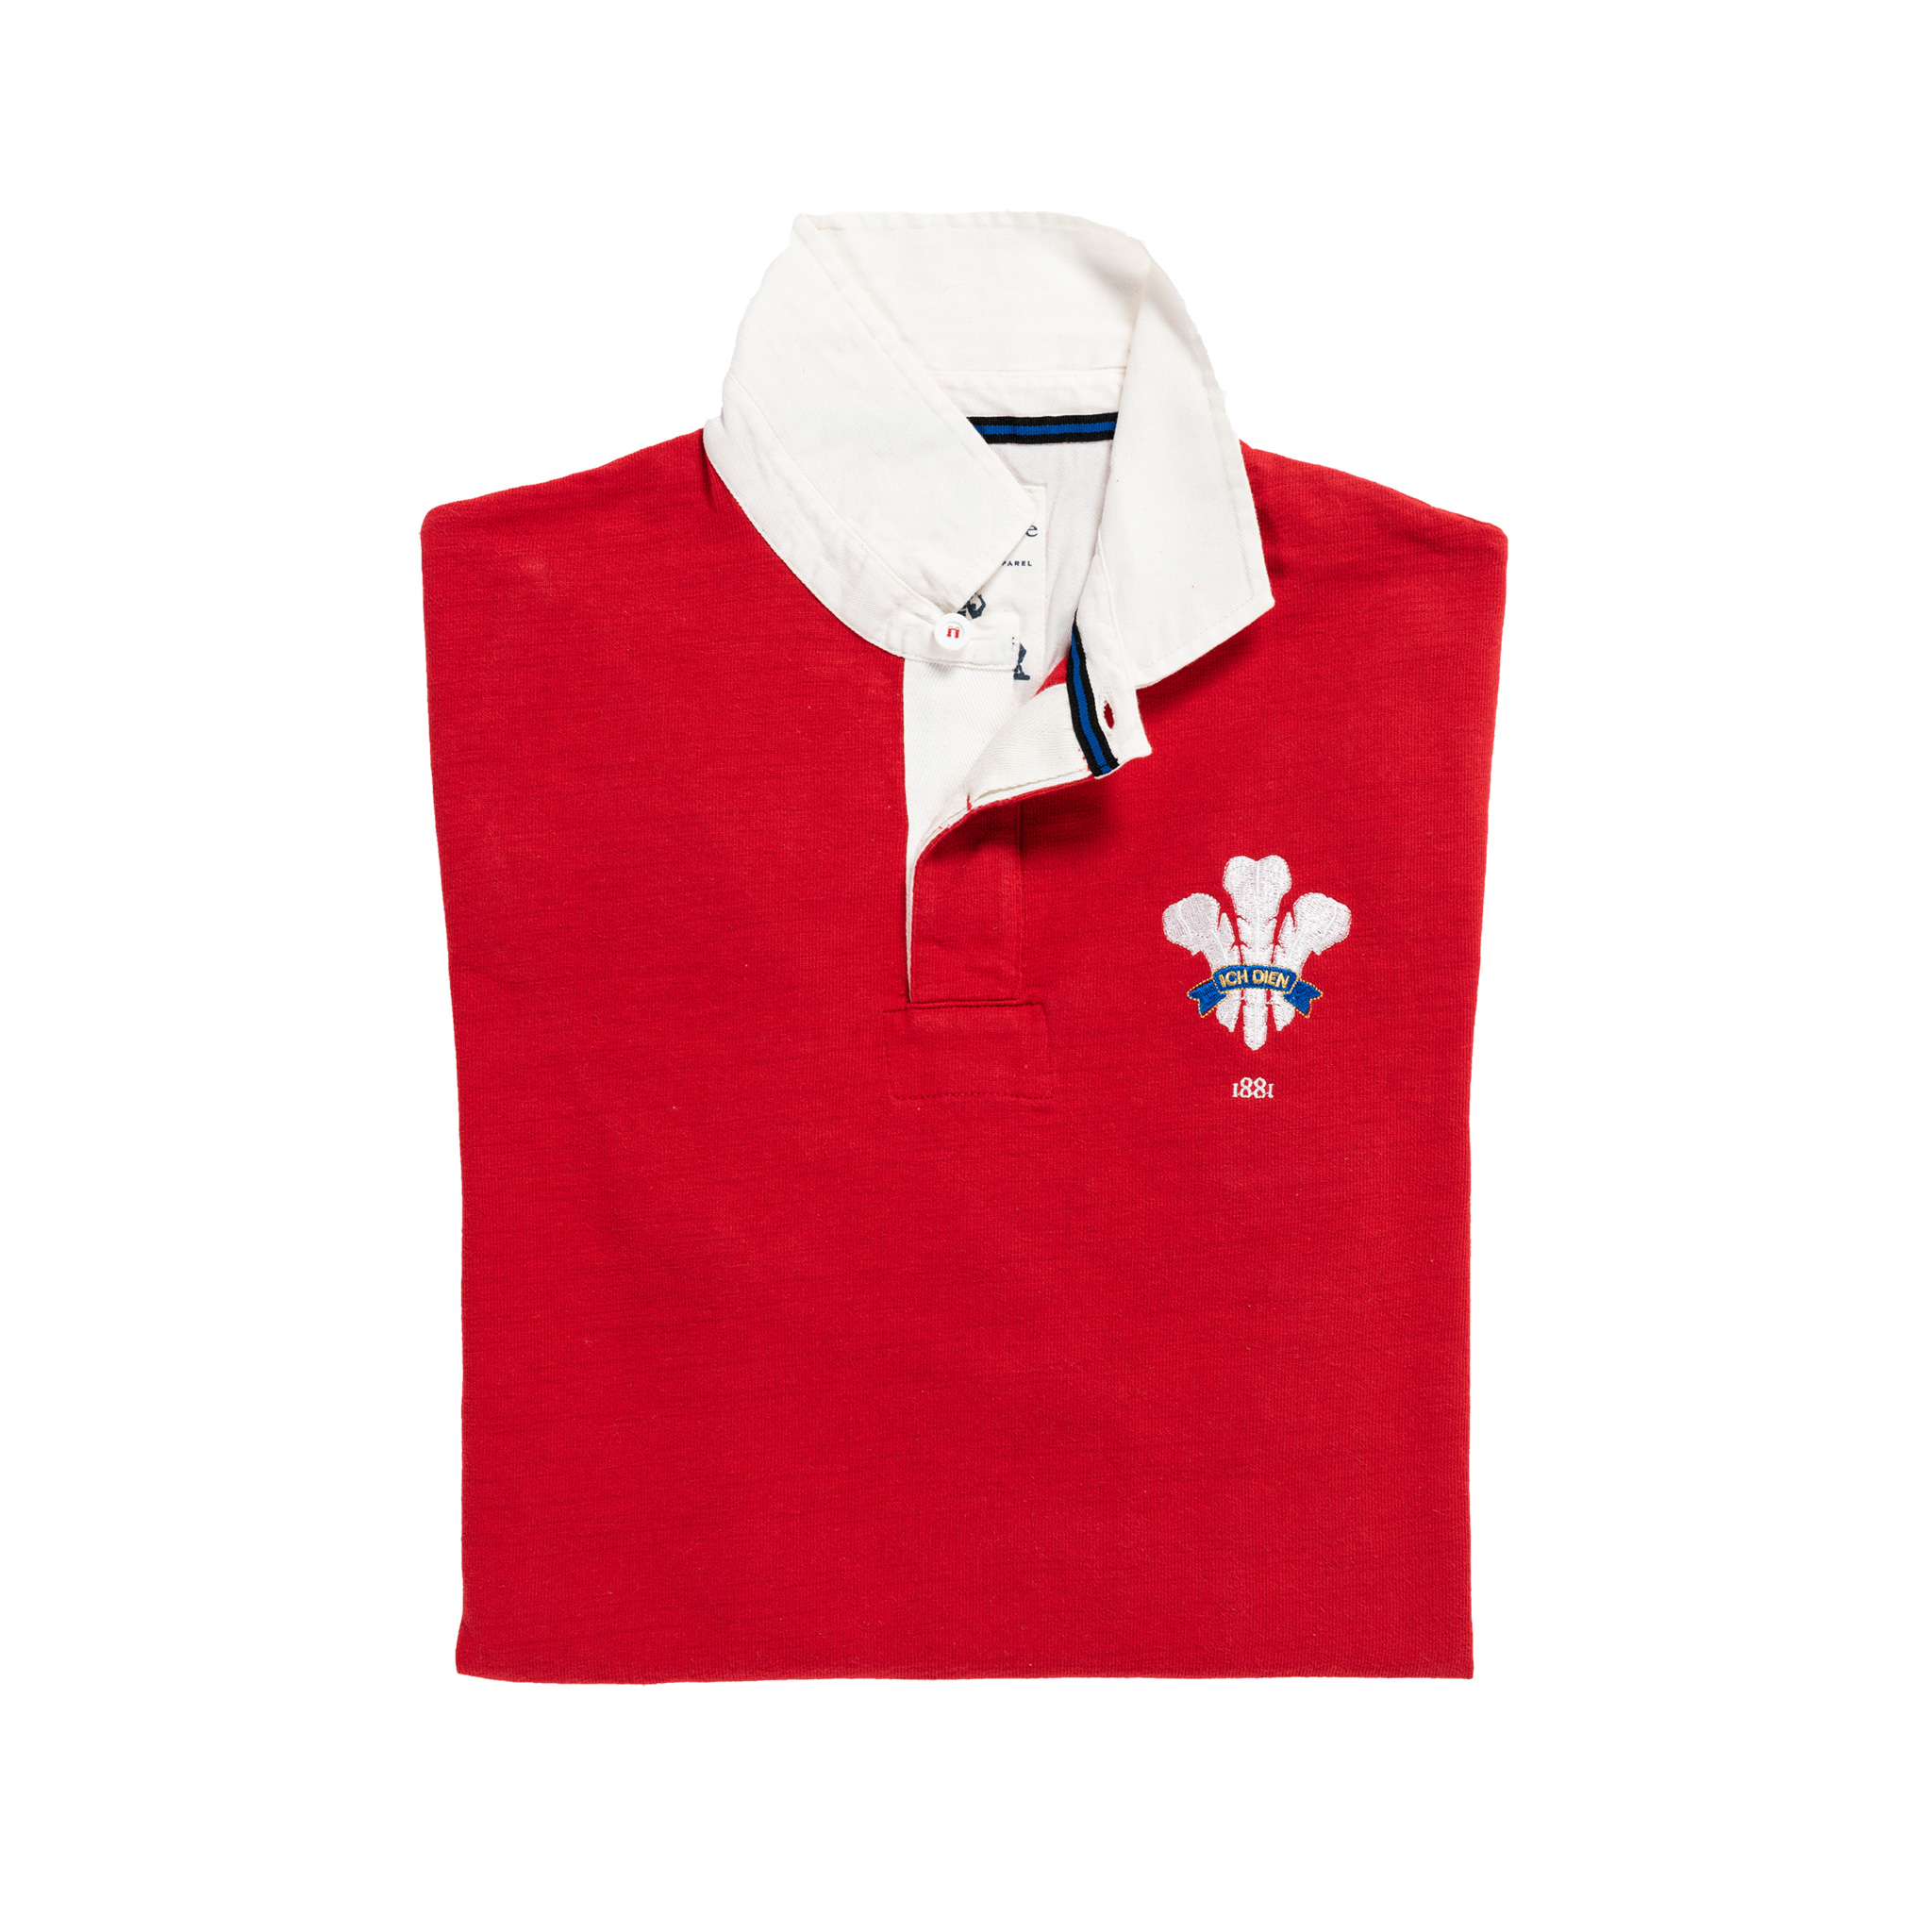 Wales 1881 Vintage Rugby Shirt